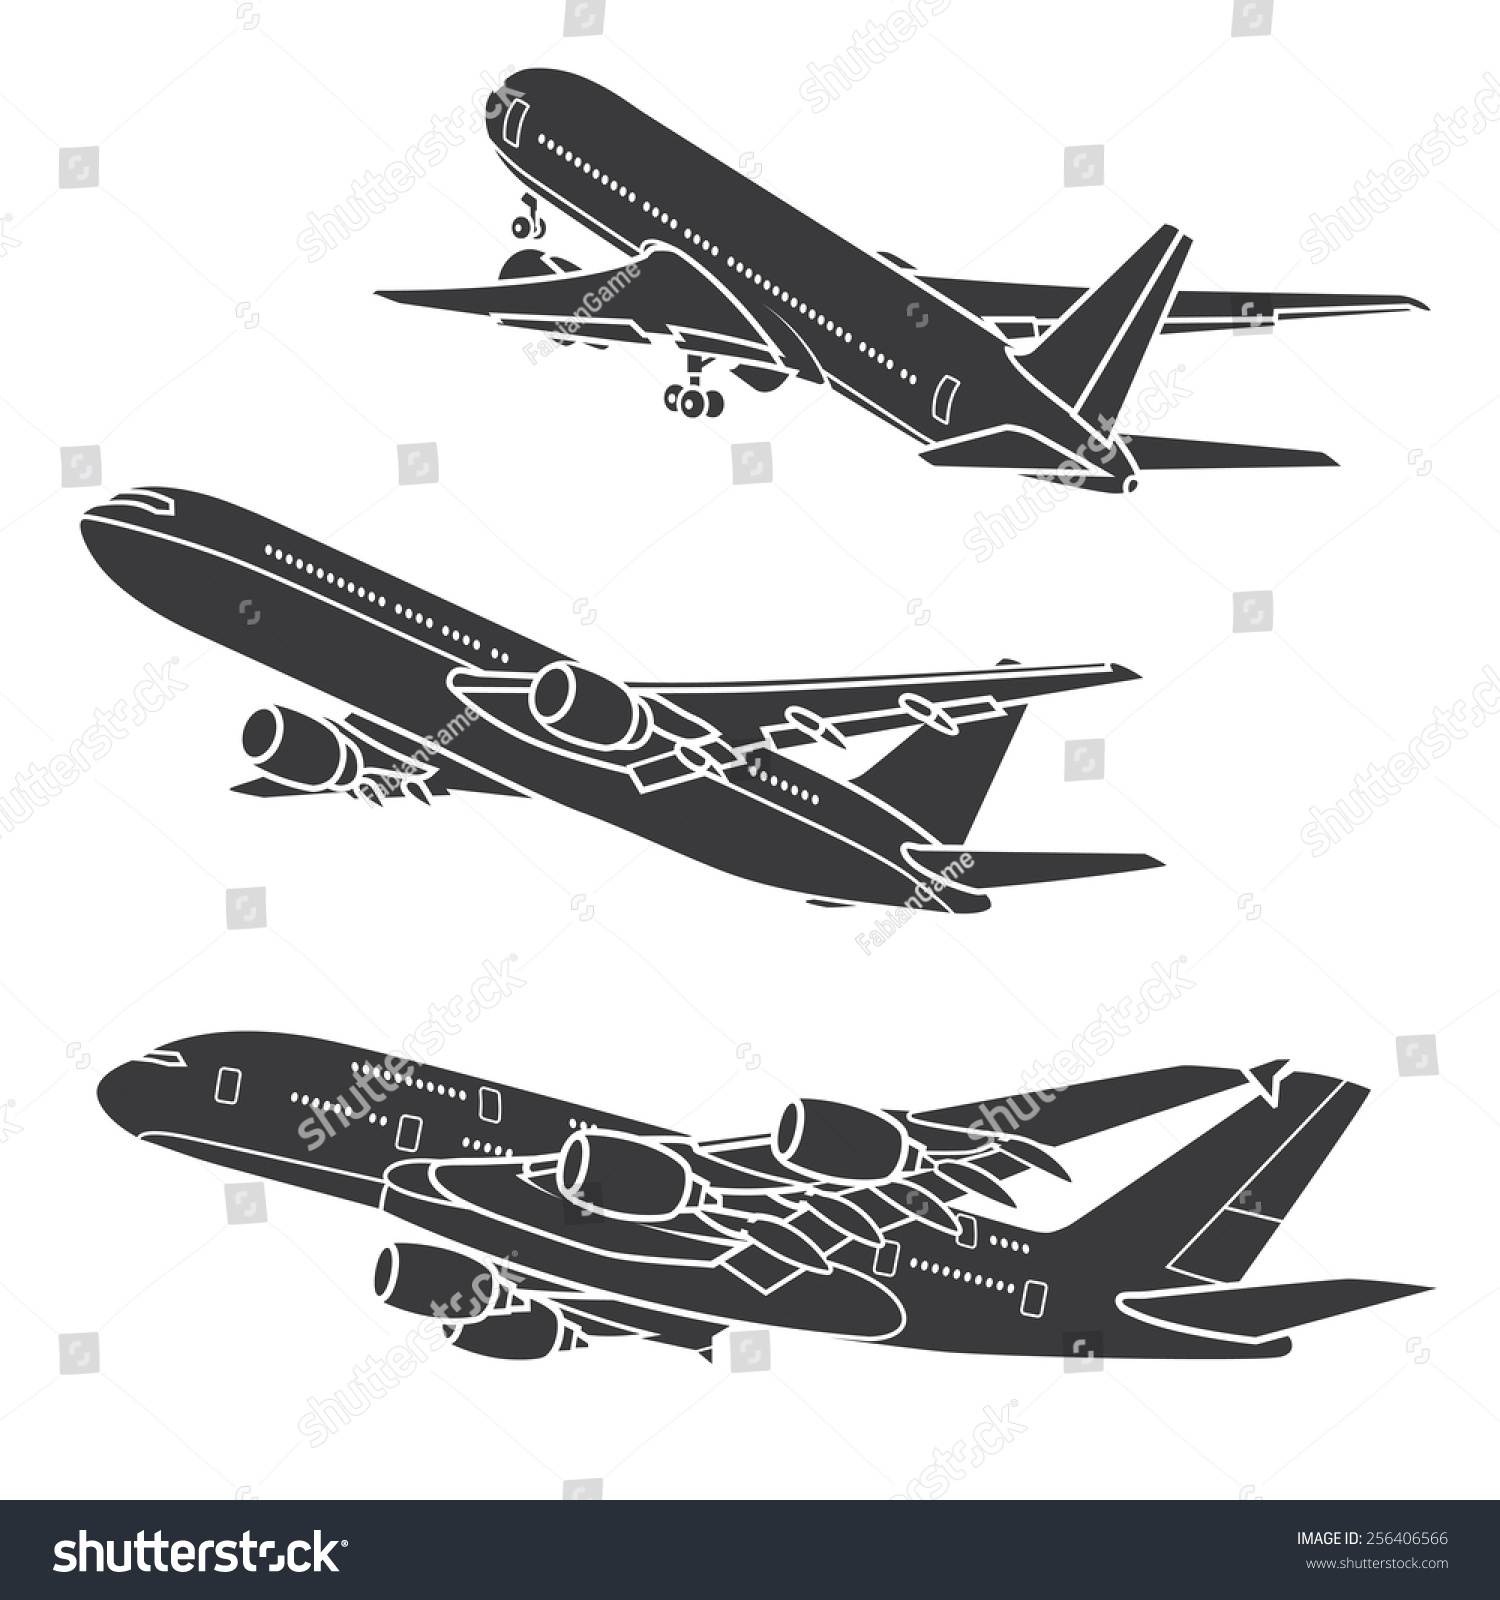 SVG of Big Commercial airplanes. Vector illustration. svg